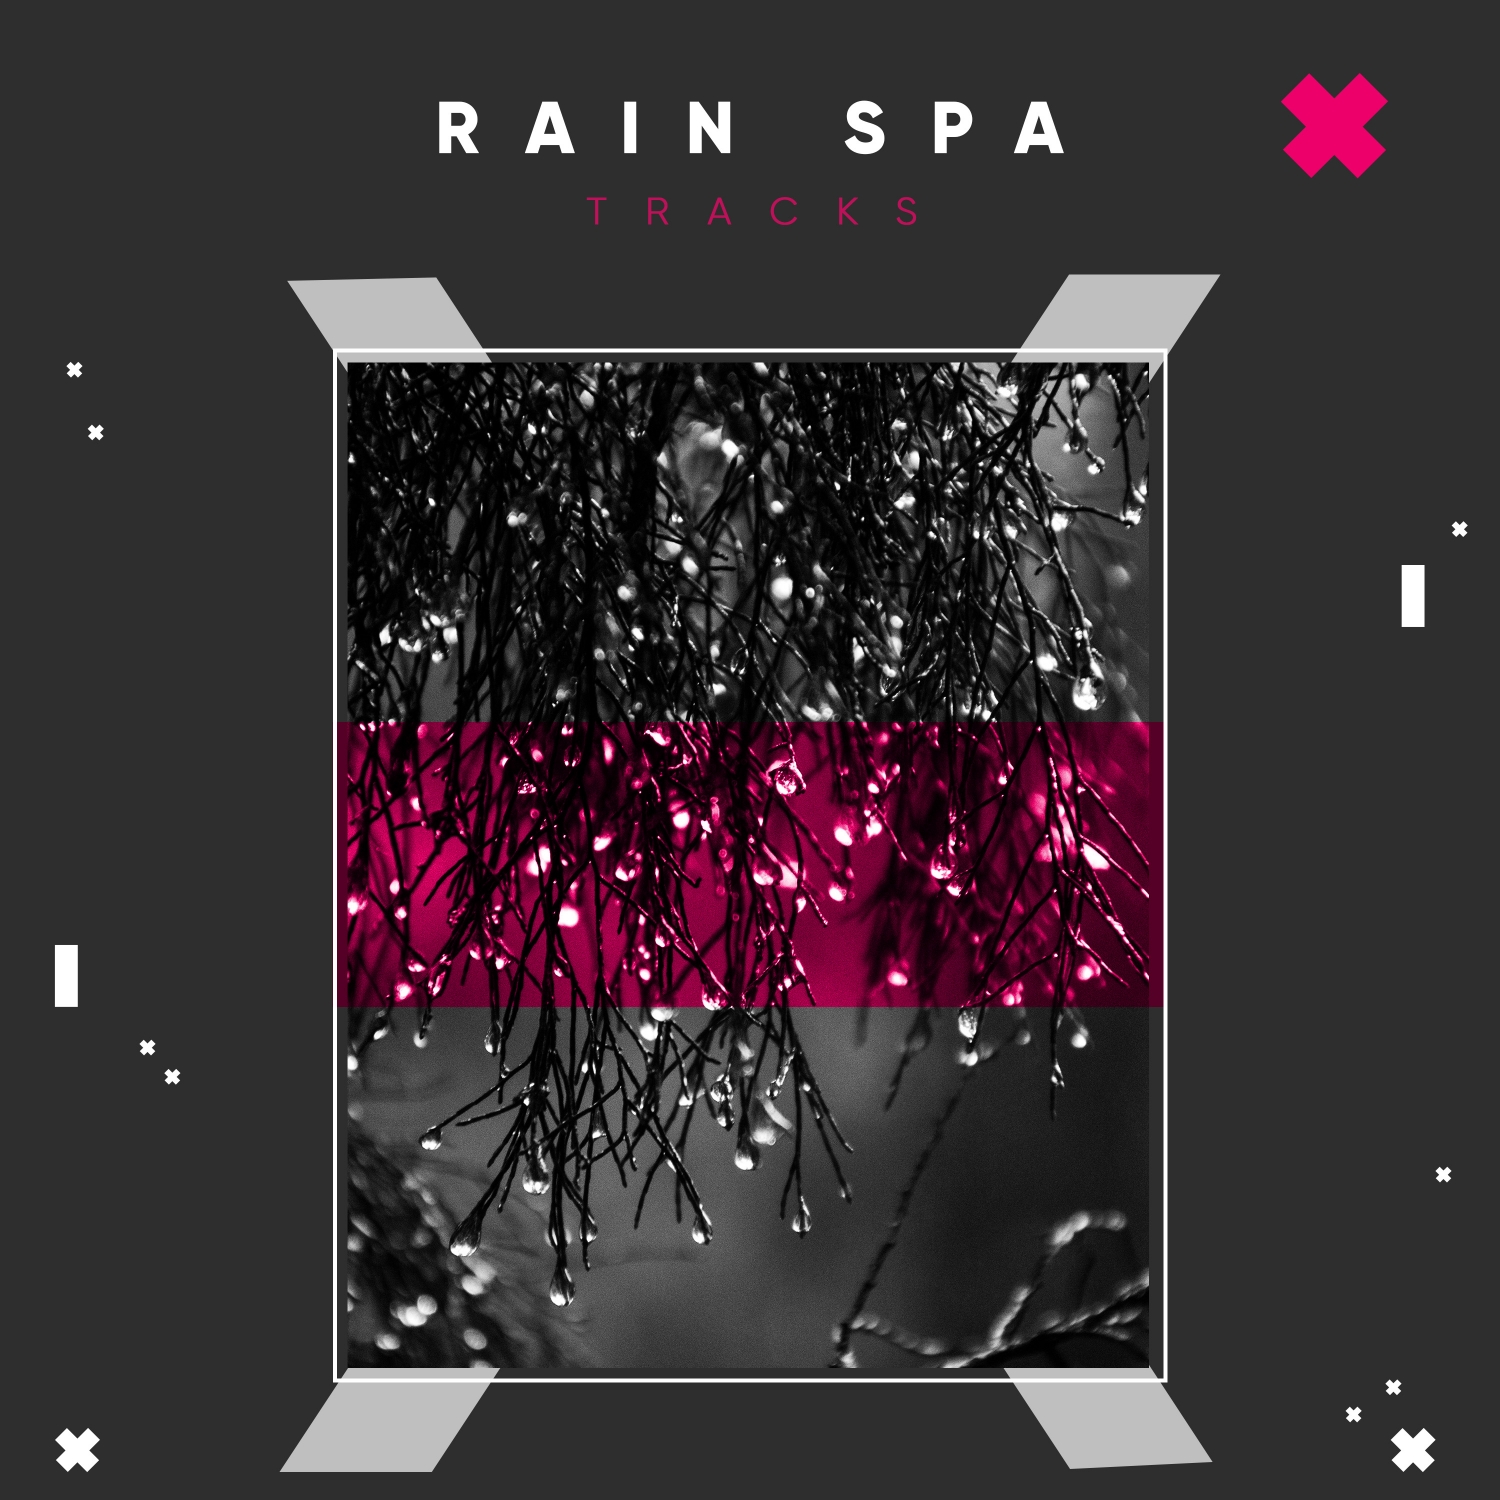 16 Rain Spa Tracks